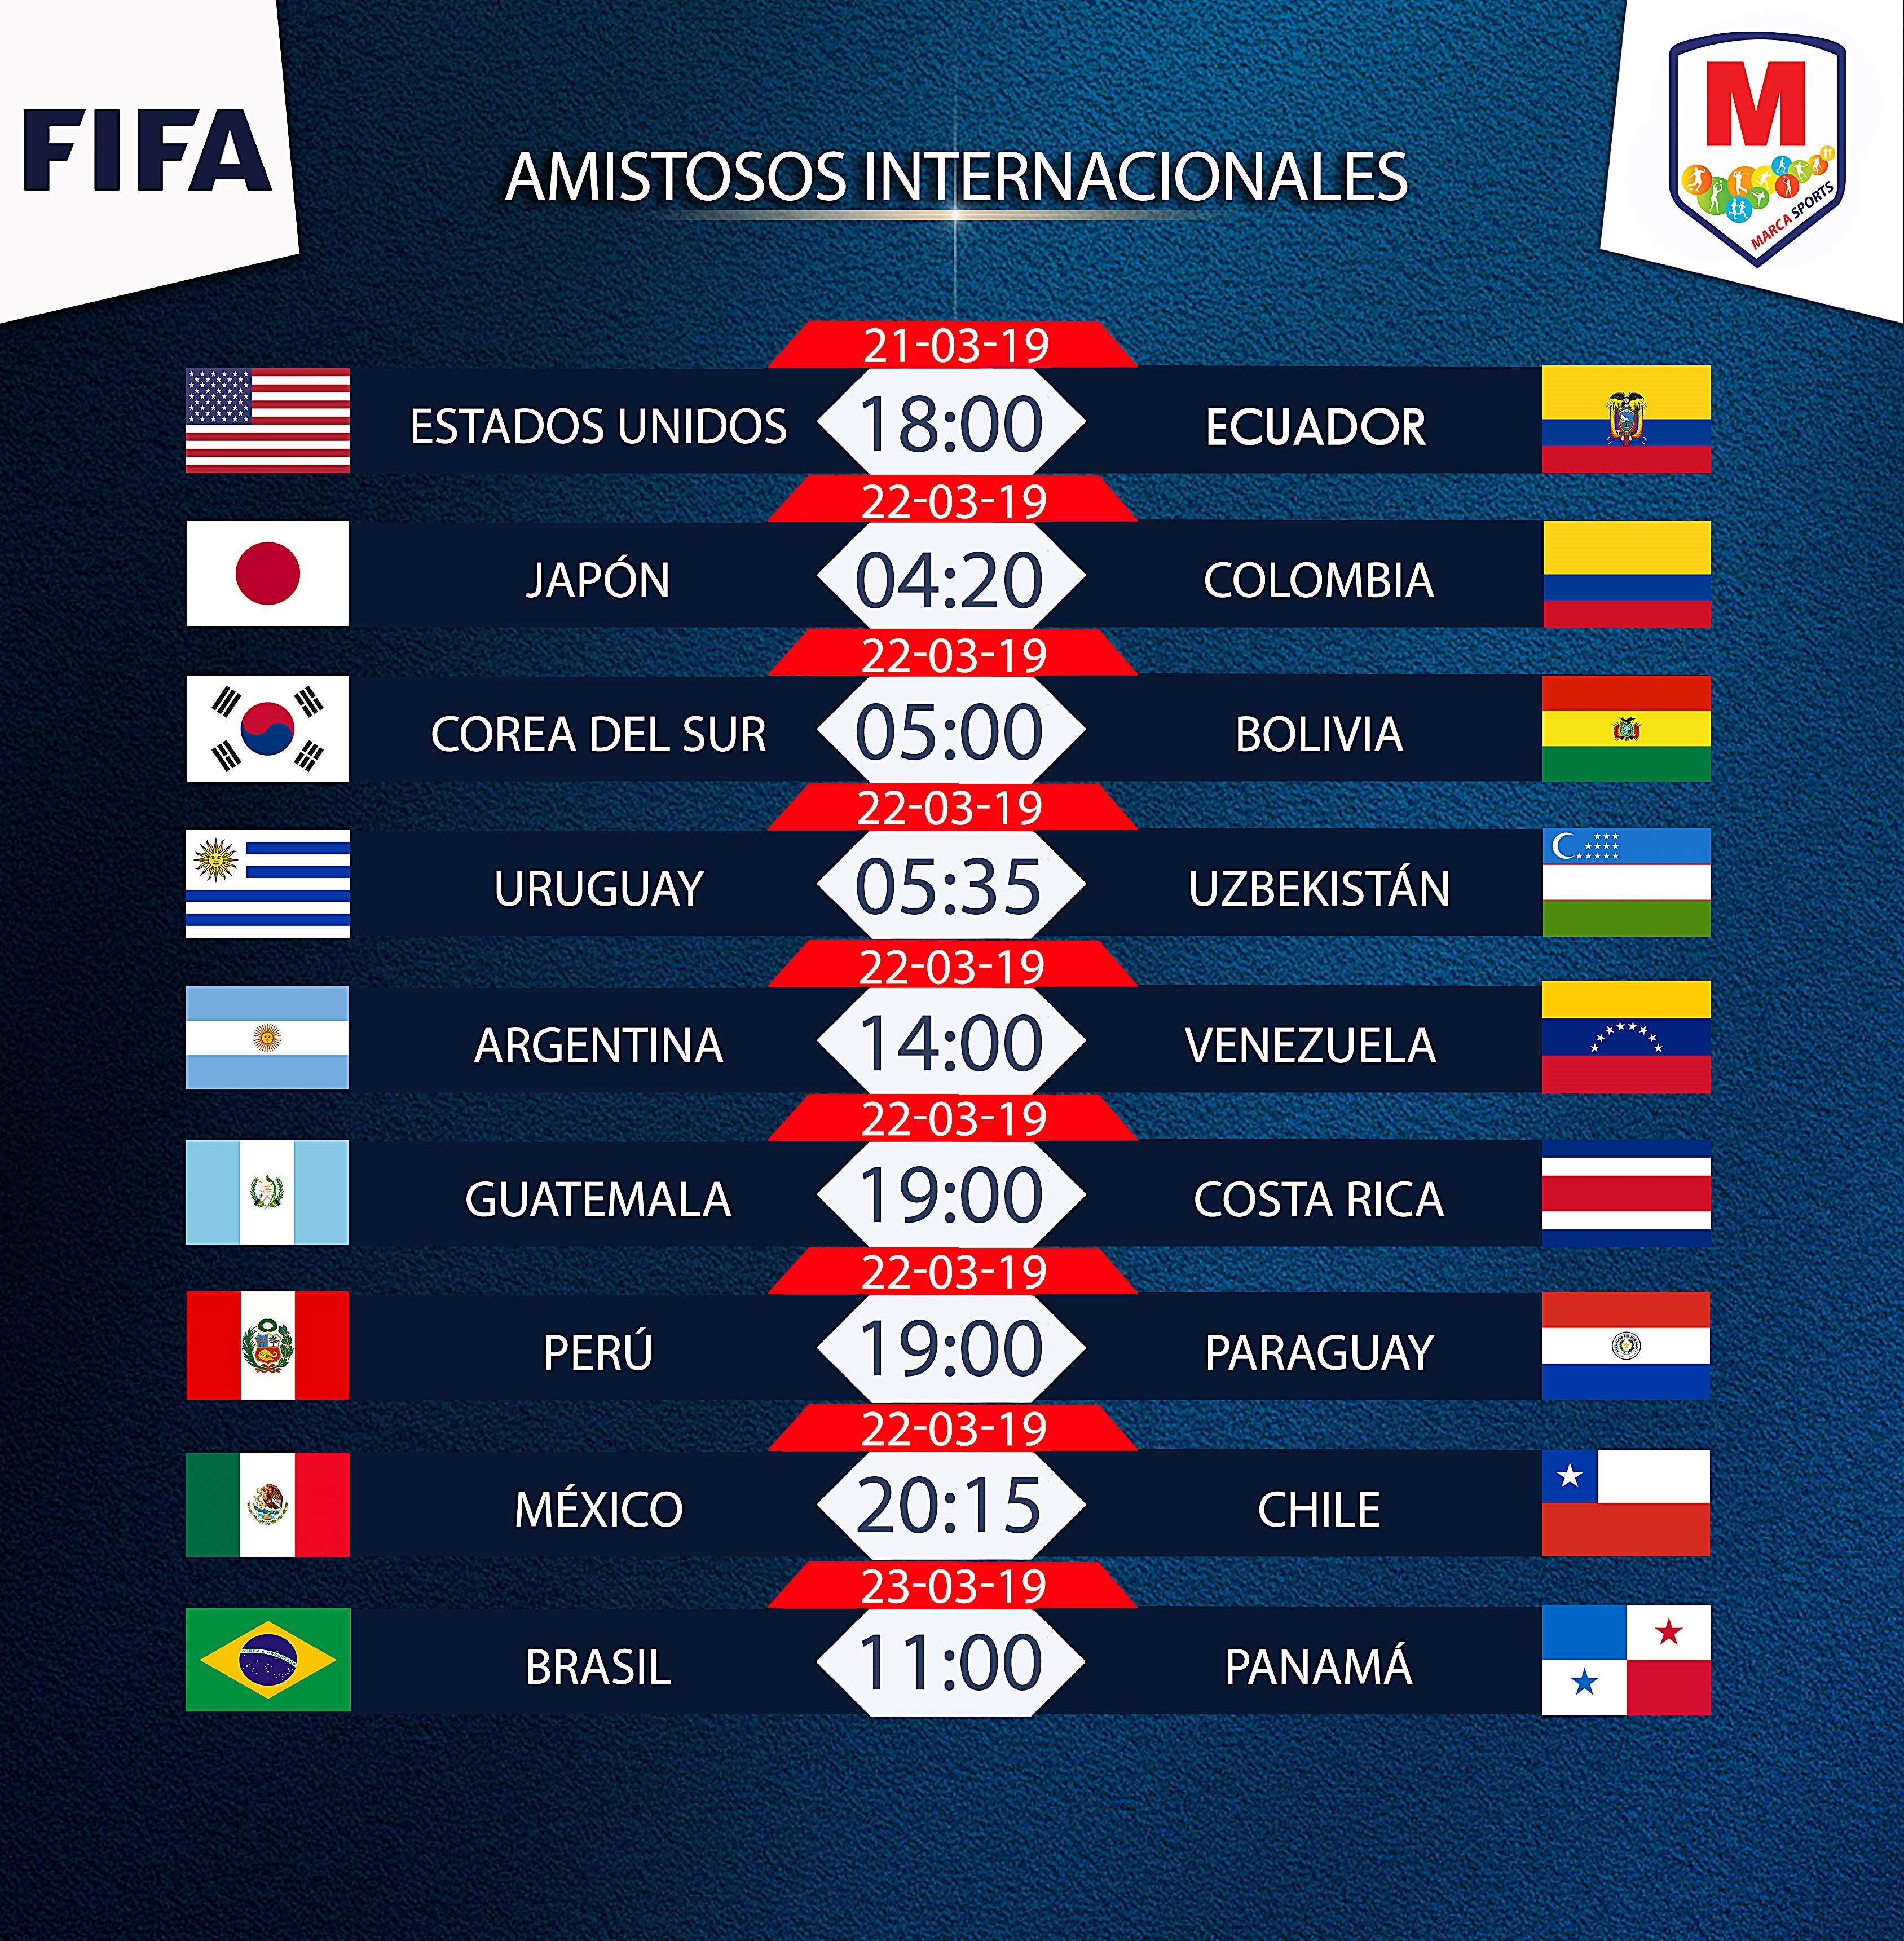 Marca GT on Twitter: "¡FECHA FIFA! amistosos para este jueves, viernes y sábado. #MarcaSportsGT #VamosGuate https://t.co/n0rPaOiAuN" /